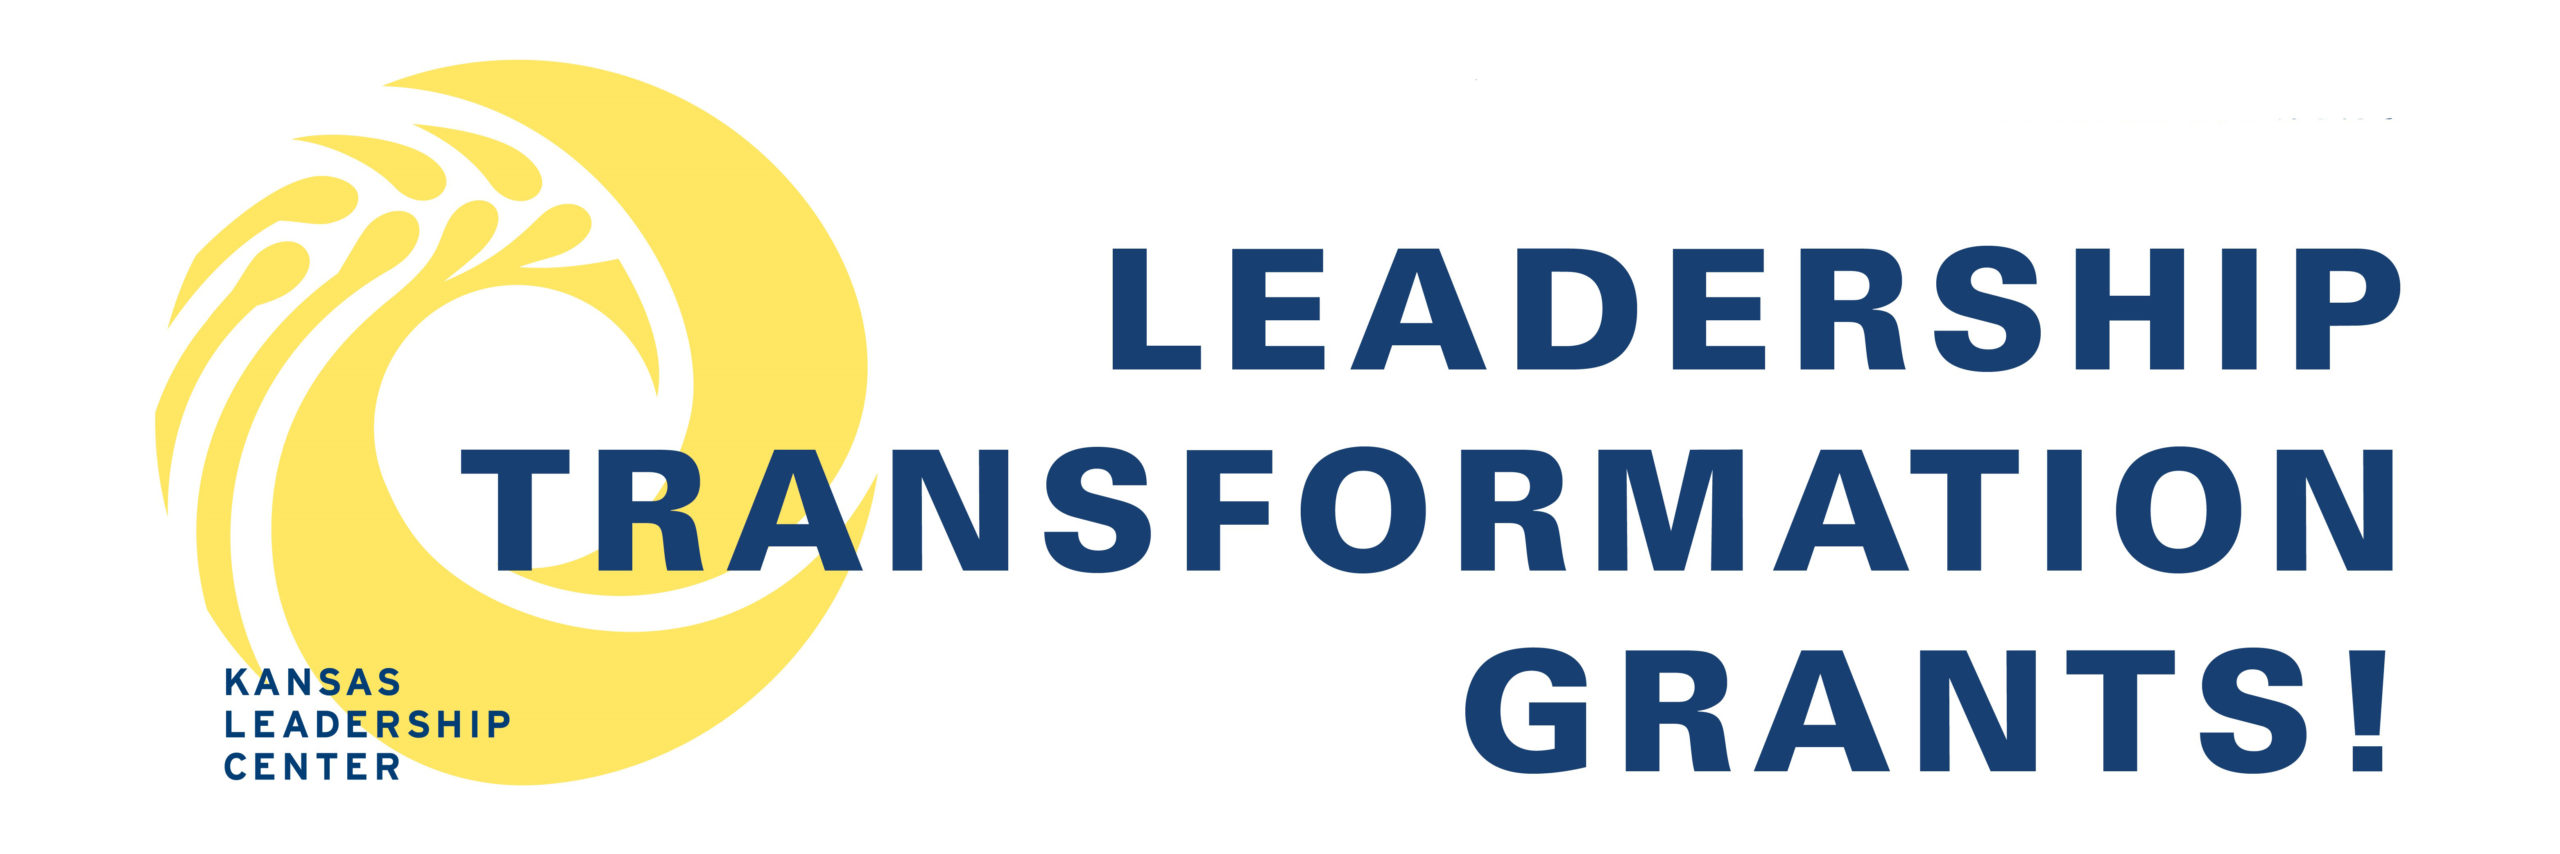 Leadership Transformation Grant Application